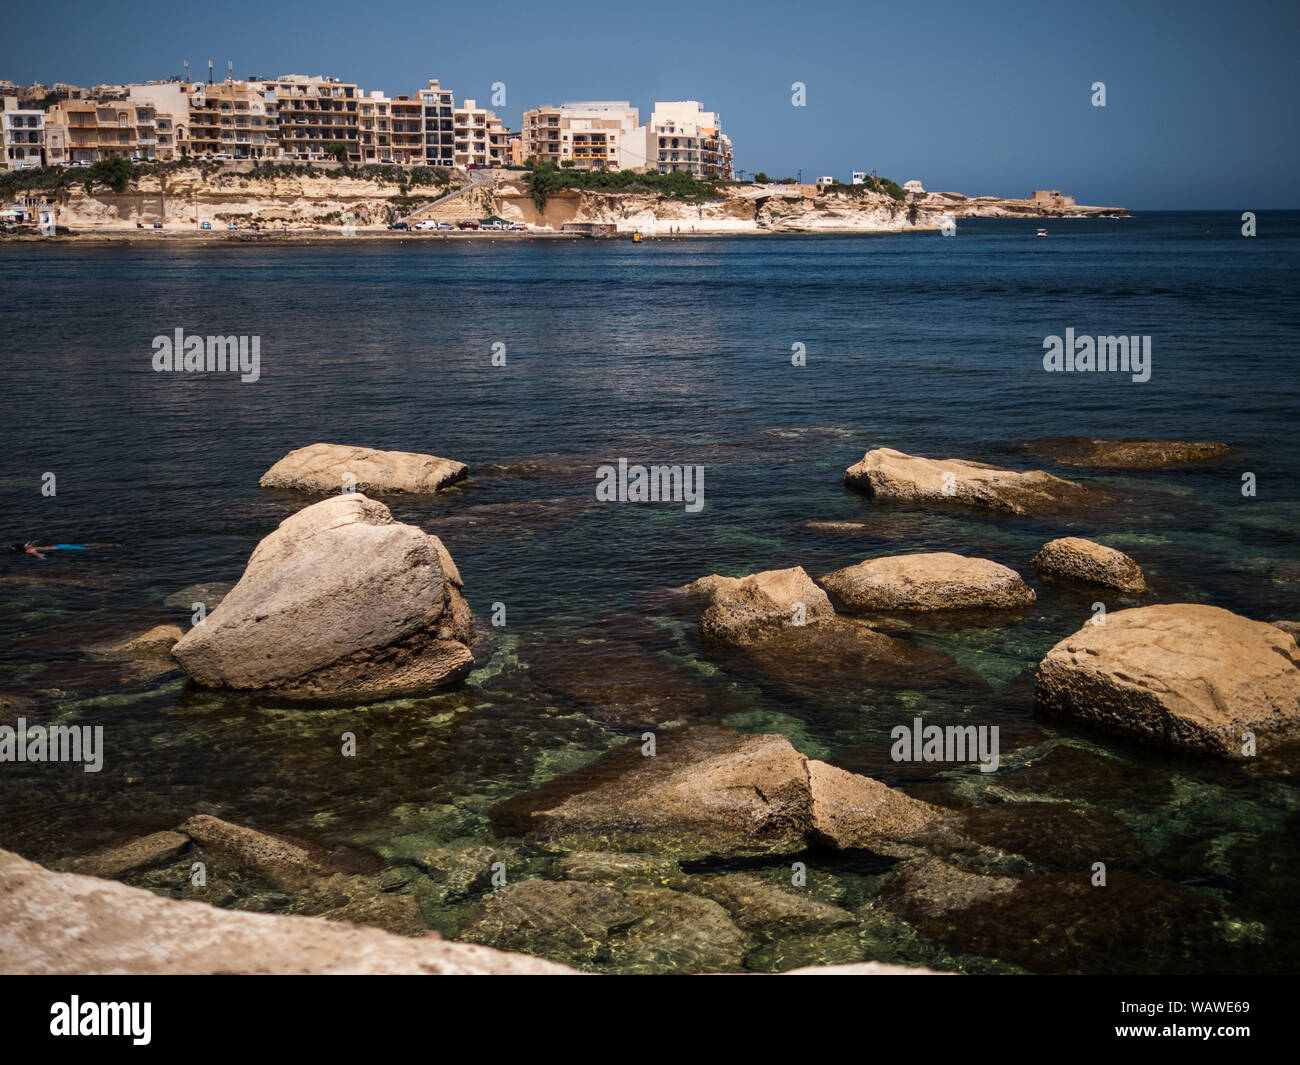 View of a beautiful Marsalforn bay, Gozo - Malta Stock Photo